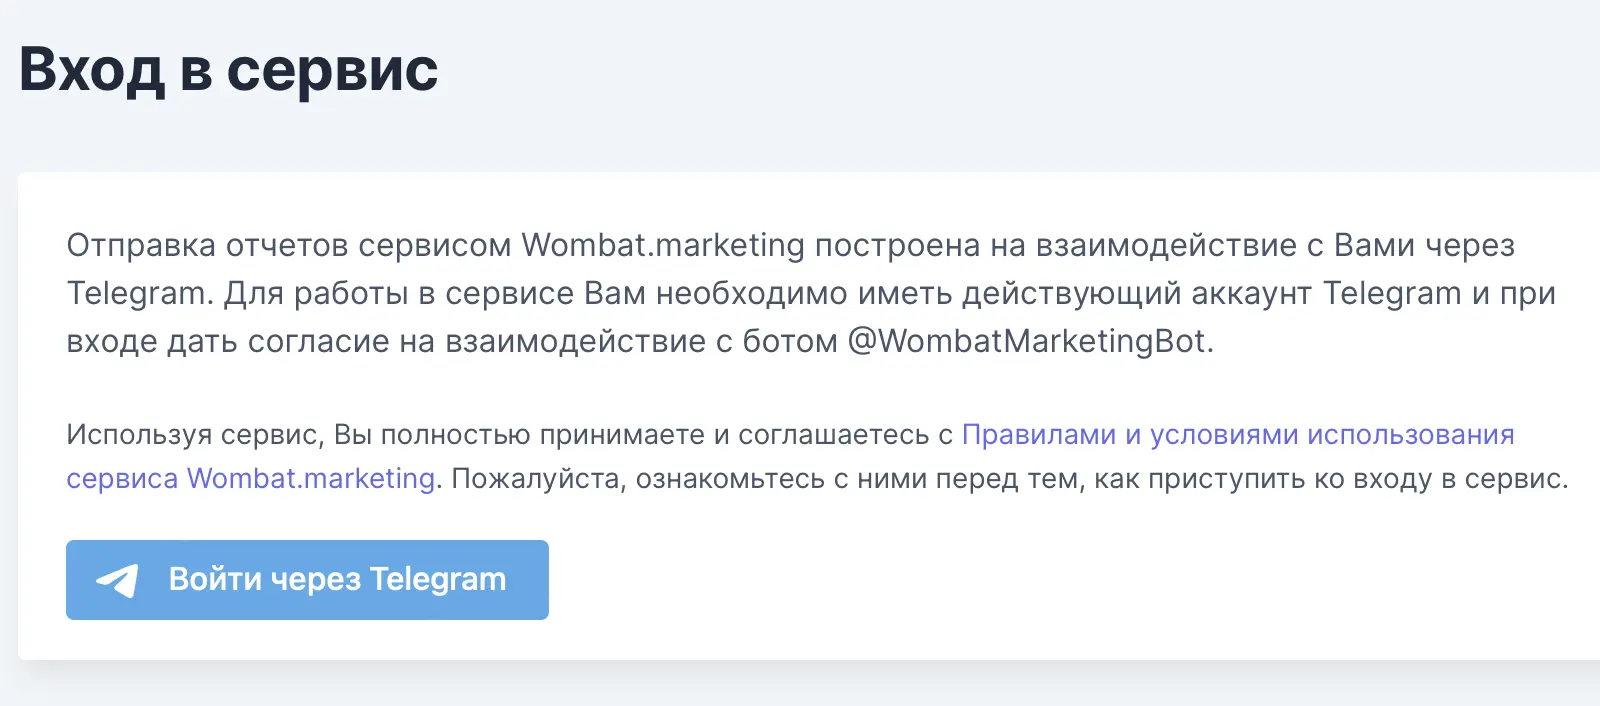 Регистрация в сервисе аналитики Wombat.Marketing